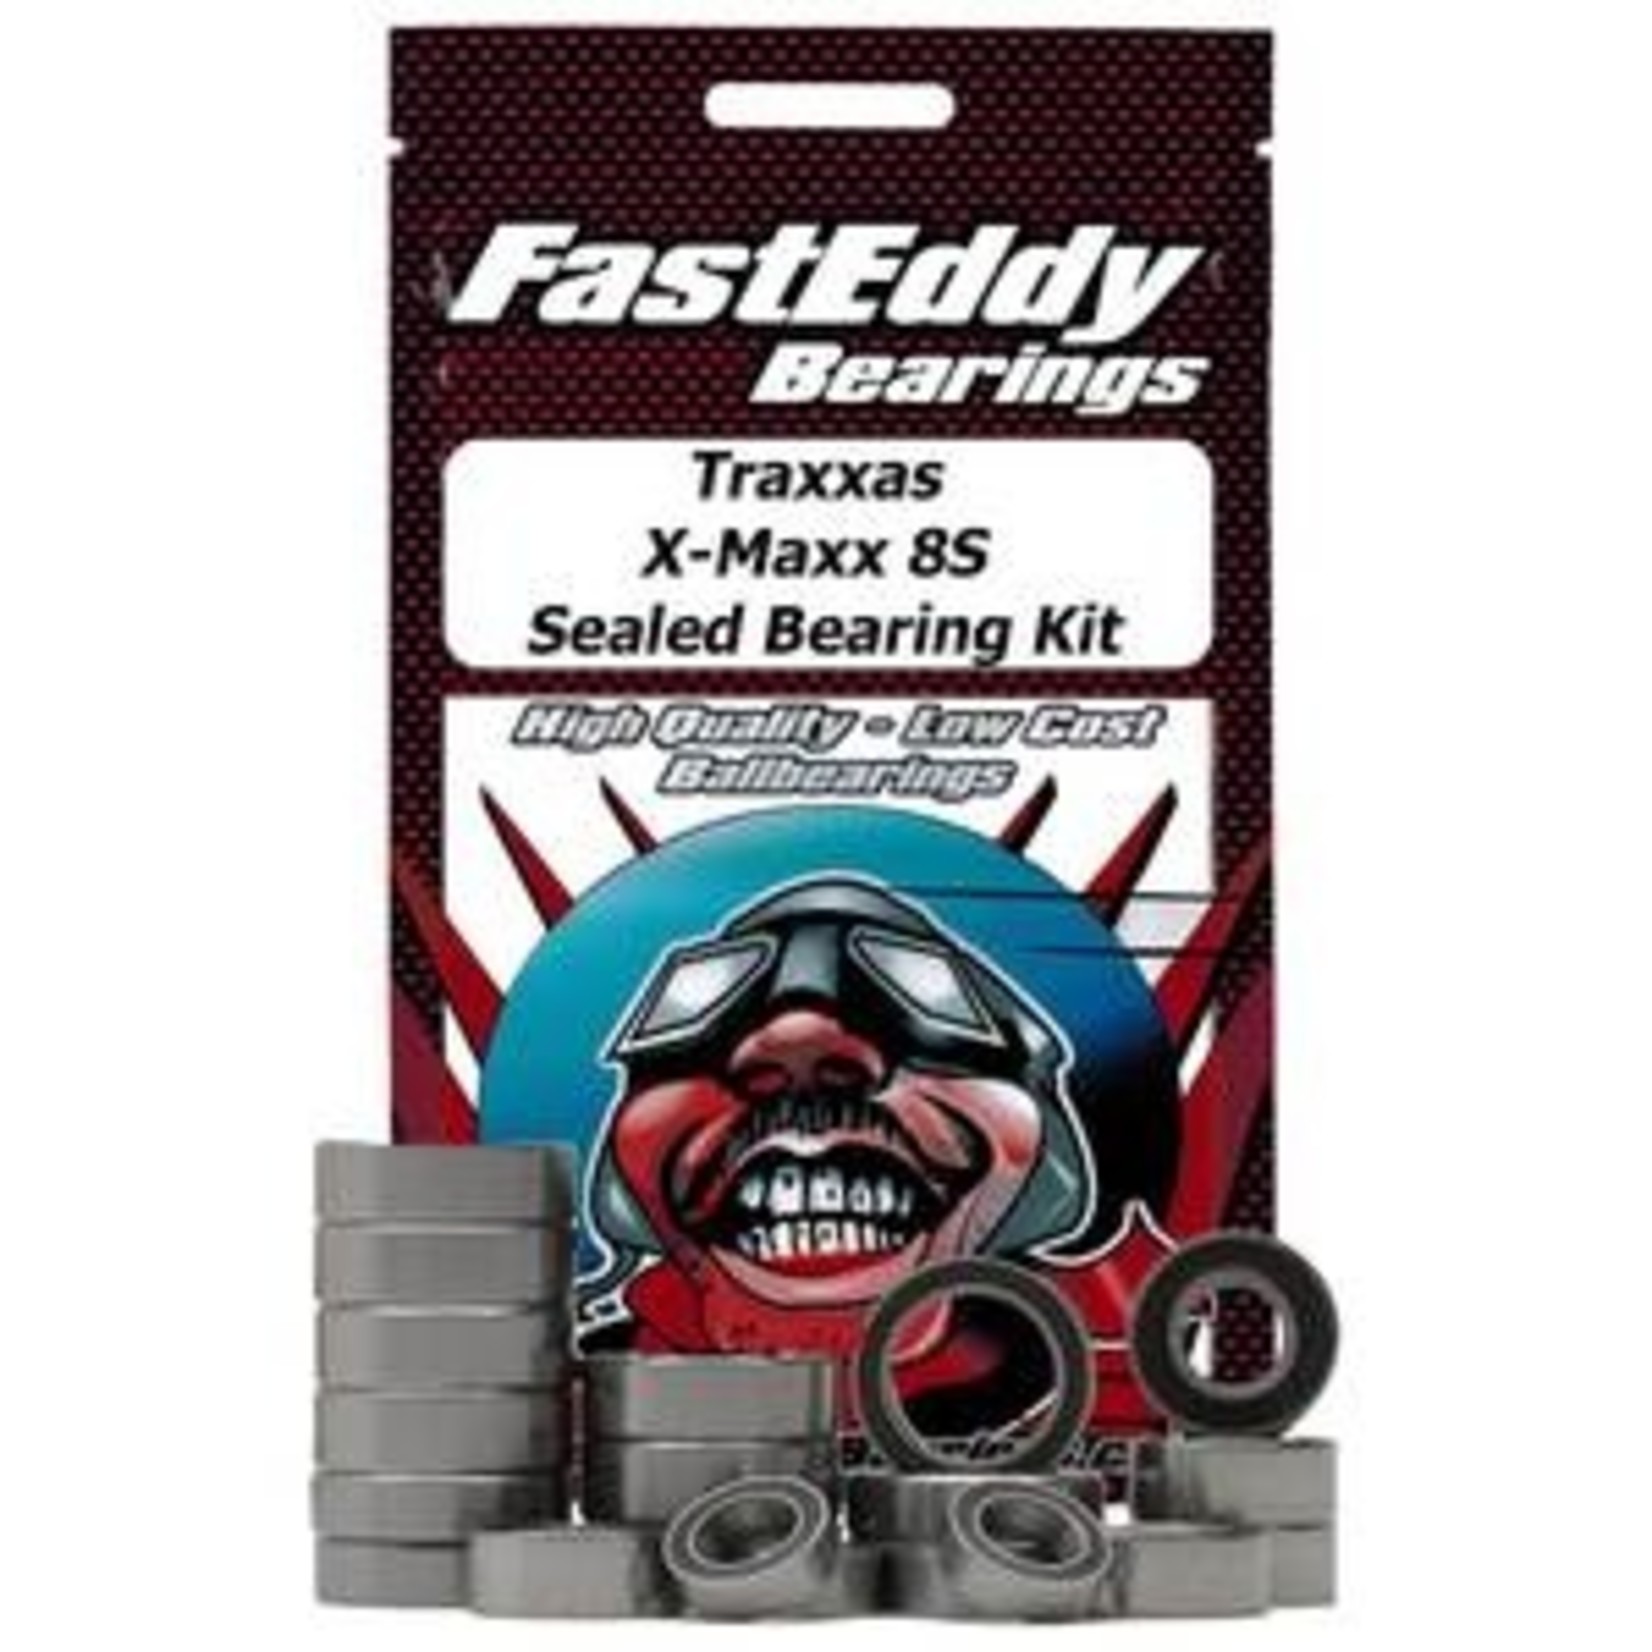 Team FastEddy Traxxas X-Maxx 8S Sealed Bearing Kit